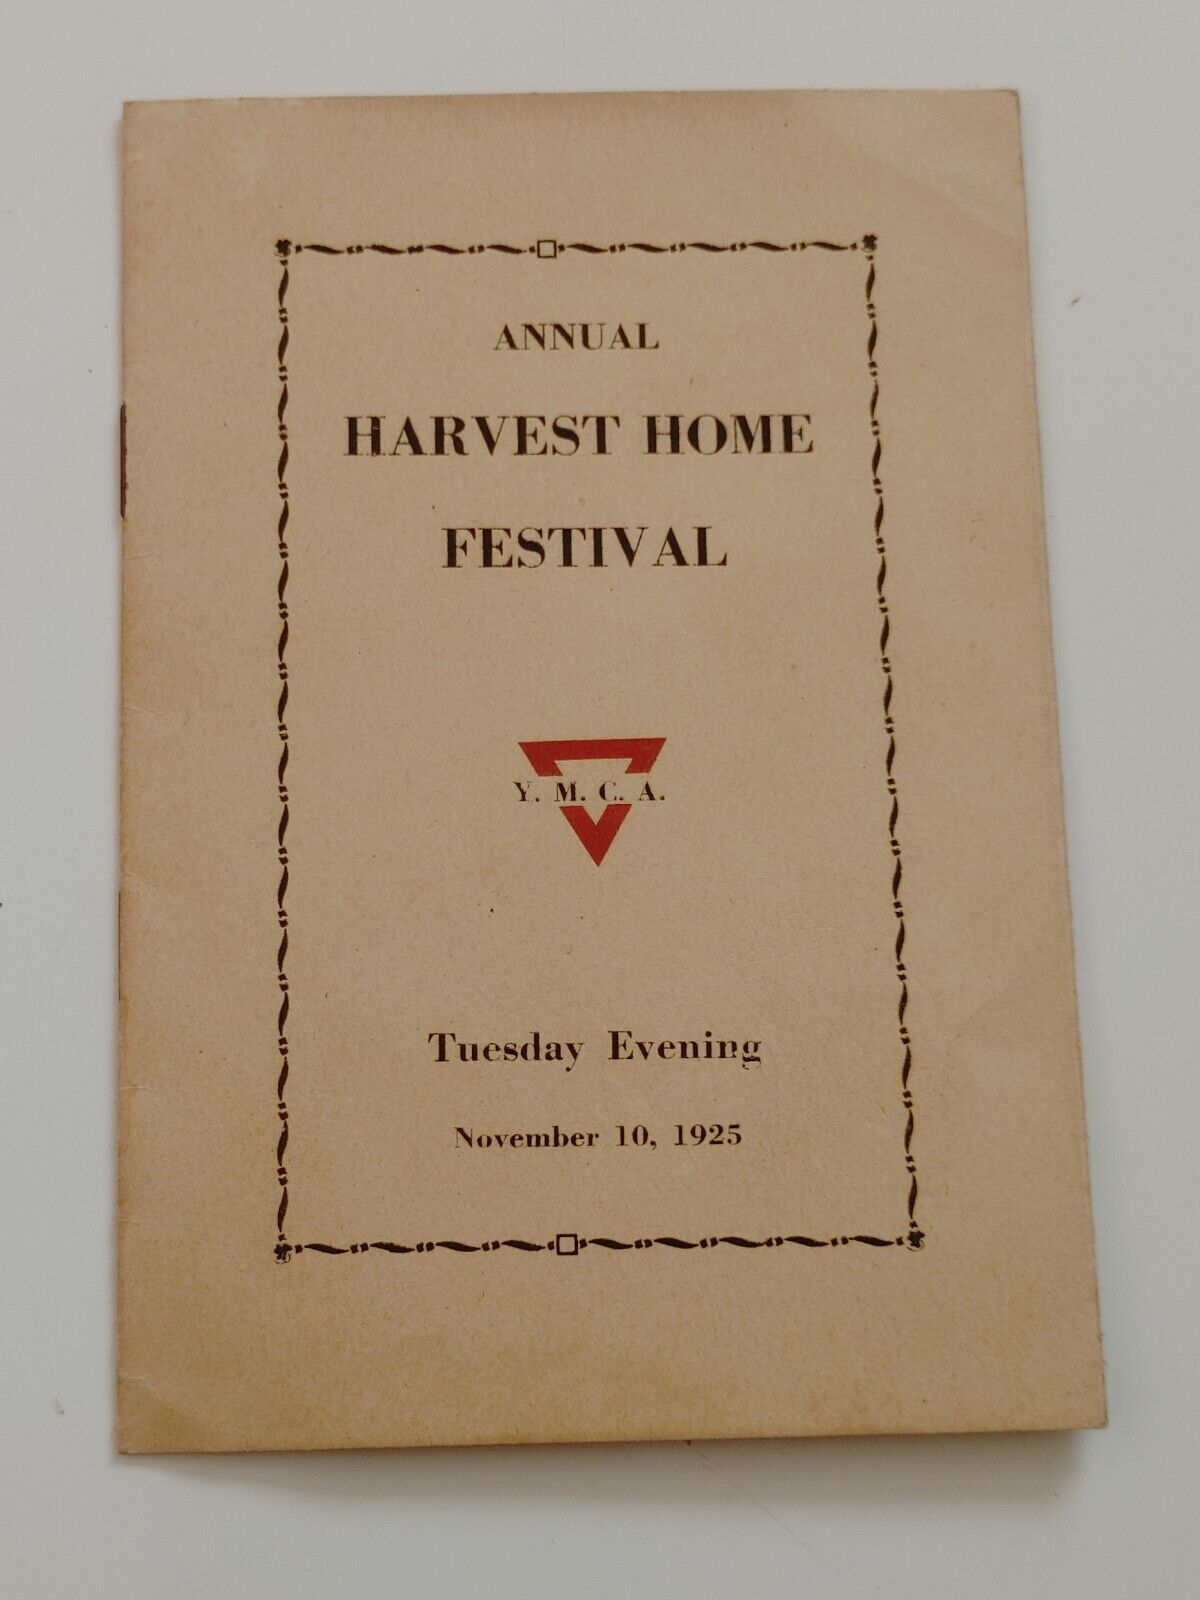 RARE 1925 ANNUAL HARVEST HOME FESTIVAL YMCA PROGRAM FINDLAY OHIO